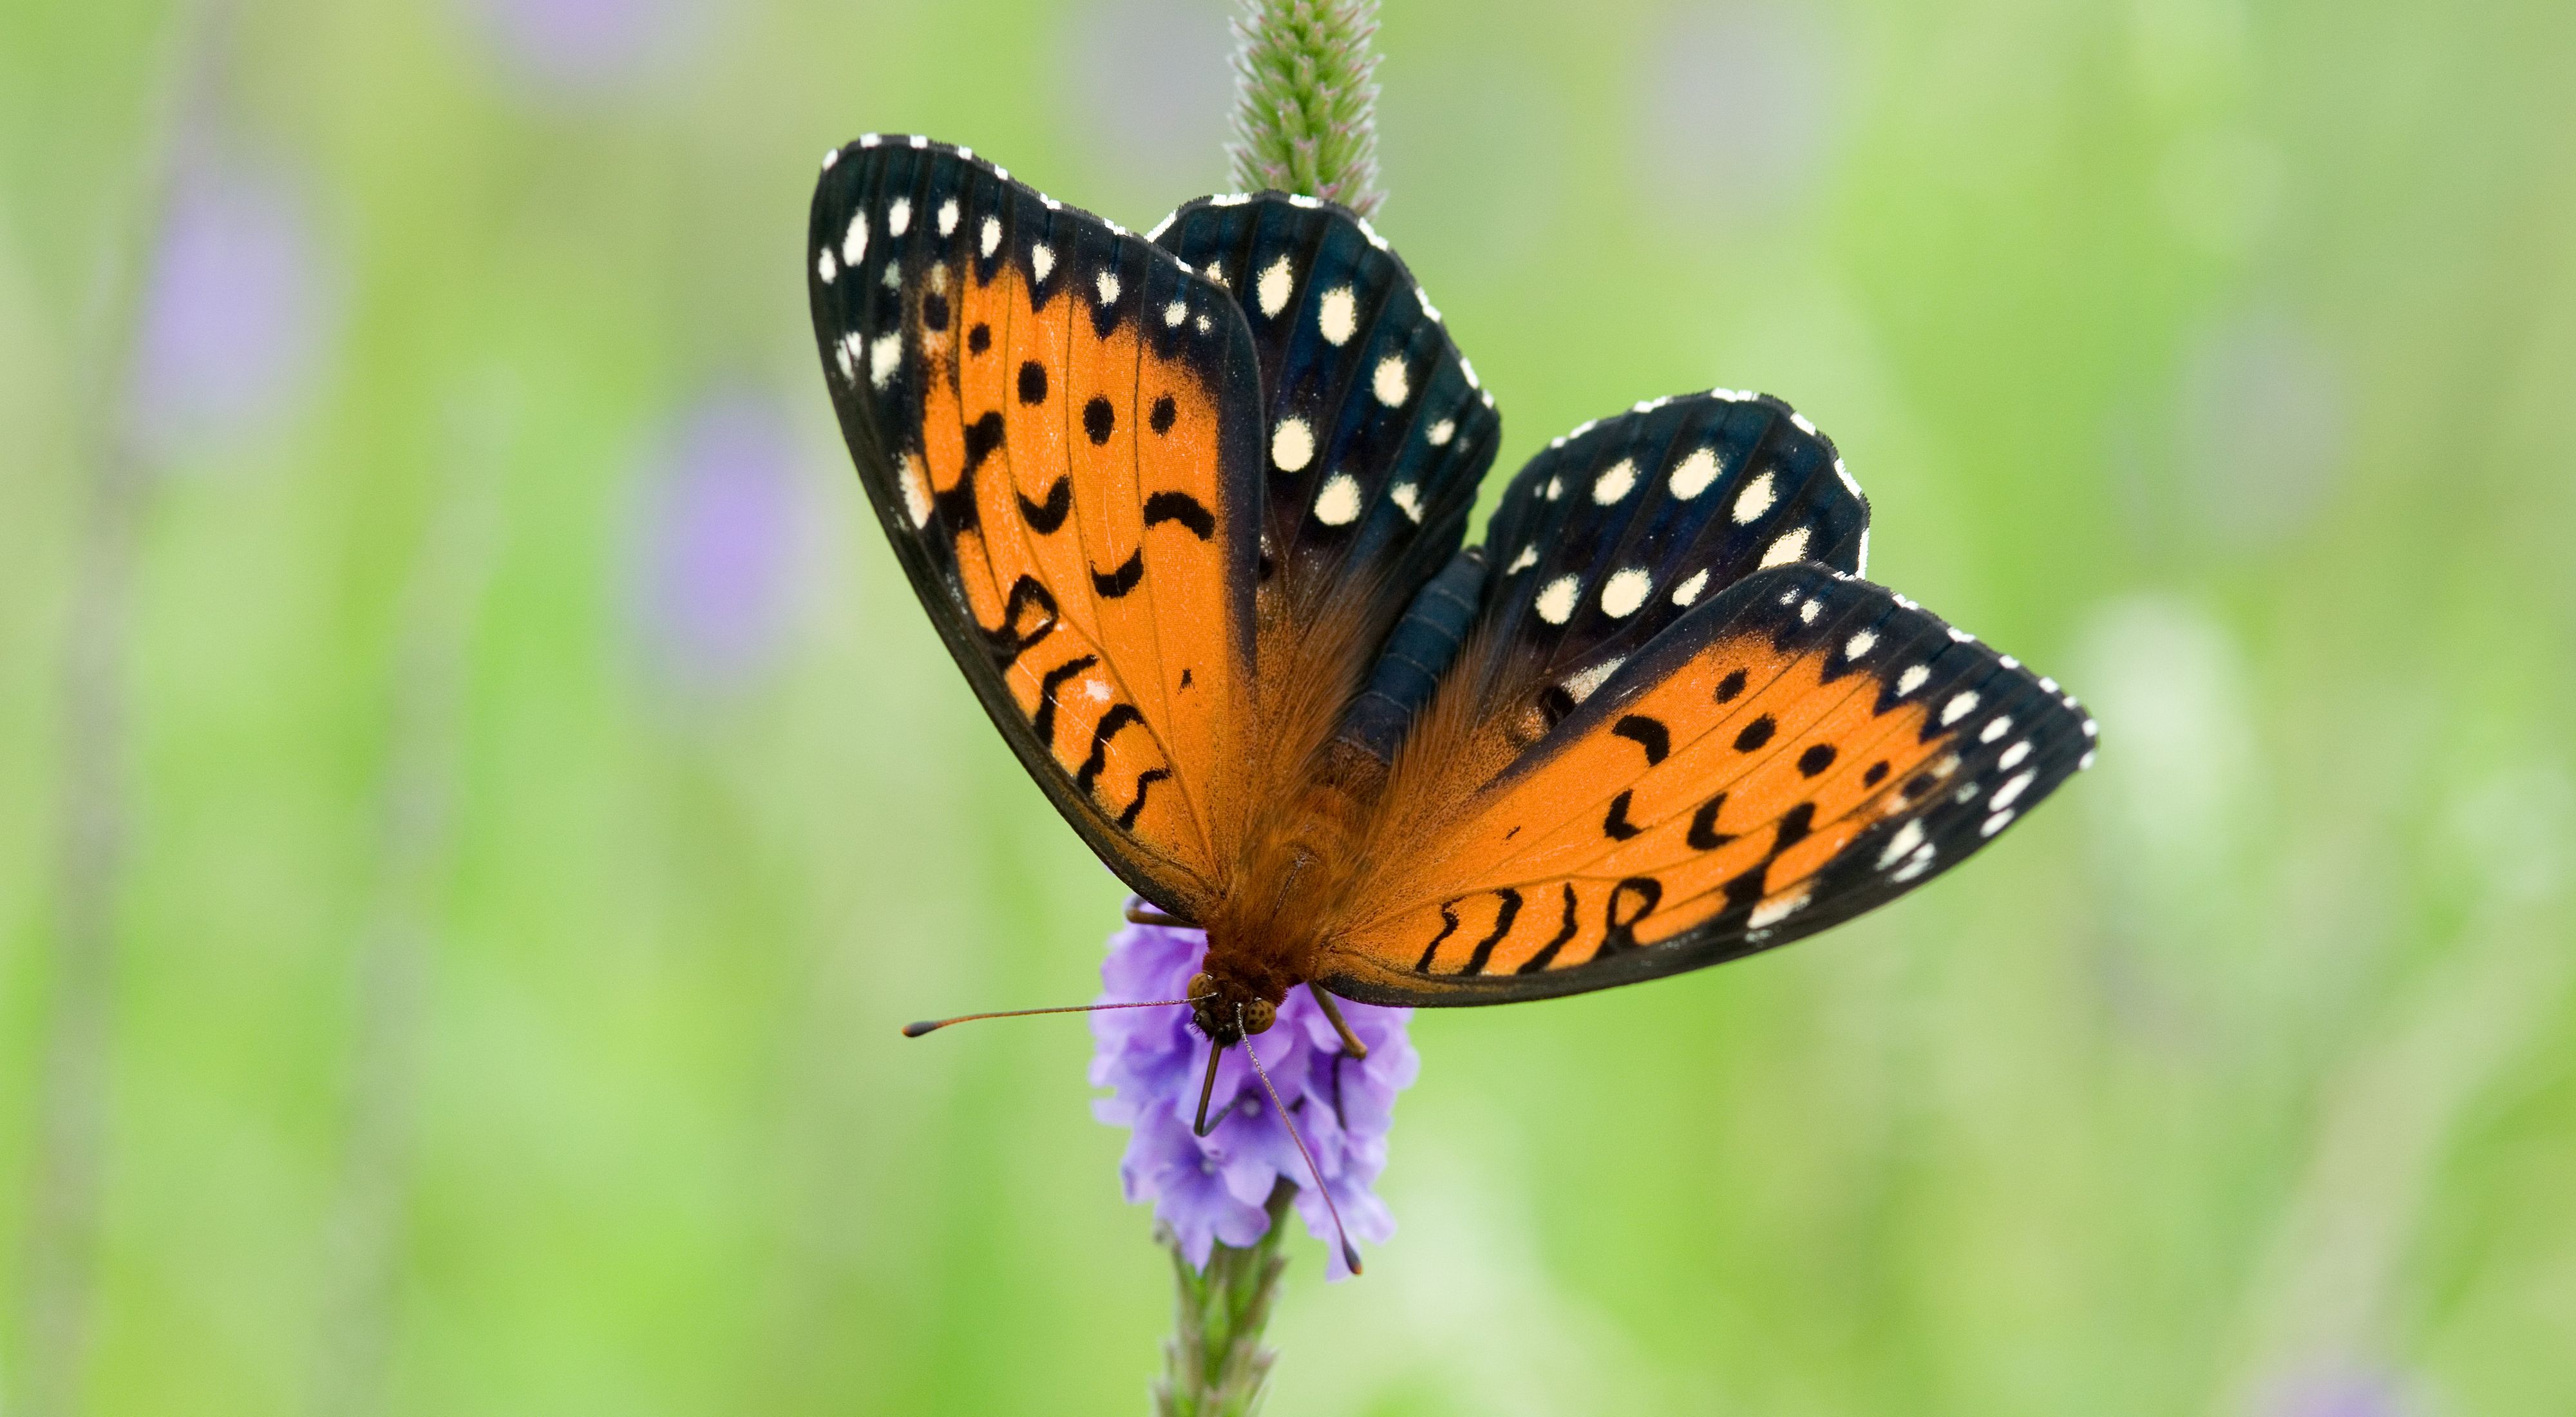 A regal fritillary butterfly feeding on nectar from a flower.